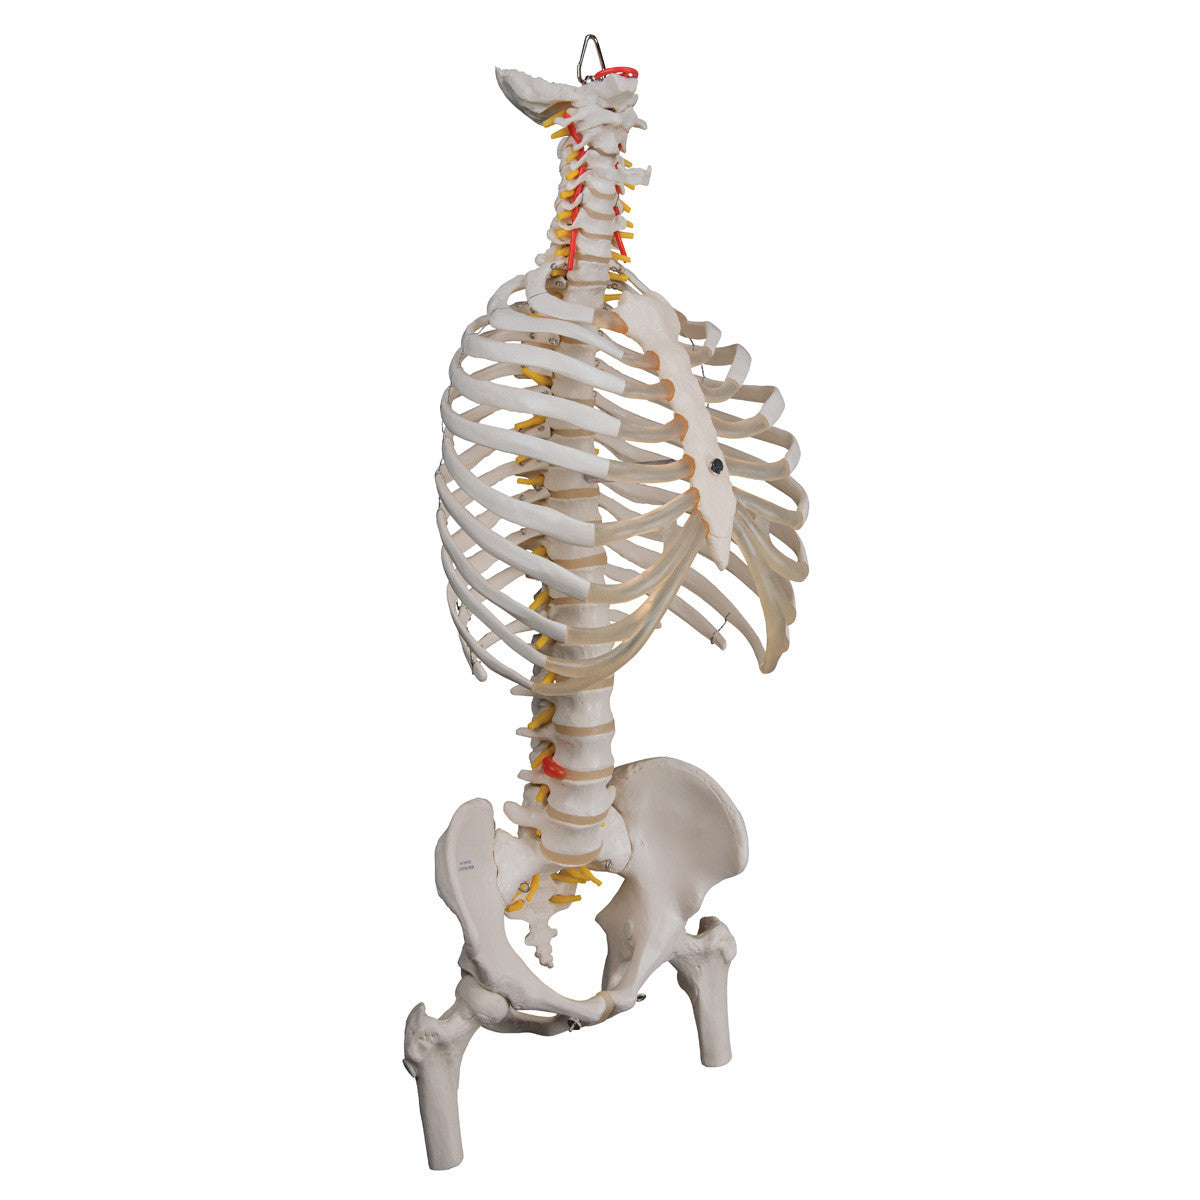 a56-2_02_1200_1200_classic-flexible-human-spine-model-with-ribs-femur-heads-3b-smart-anatomy__31557.1589753248.1280.1280.jpg